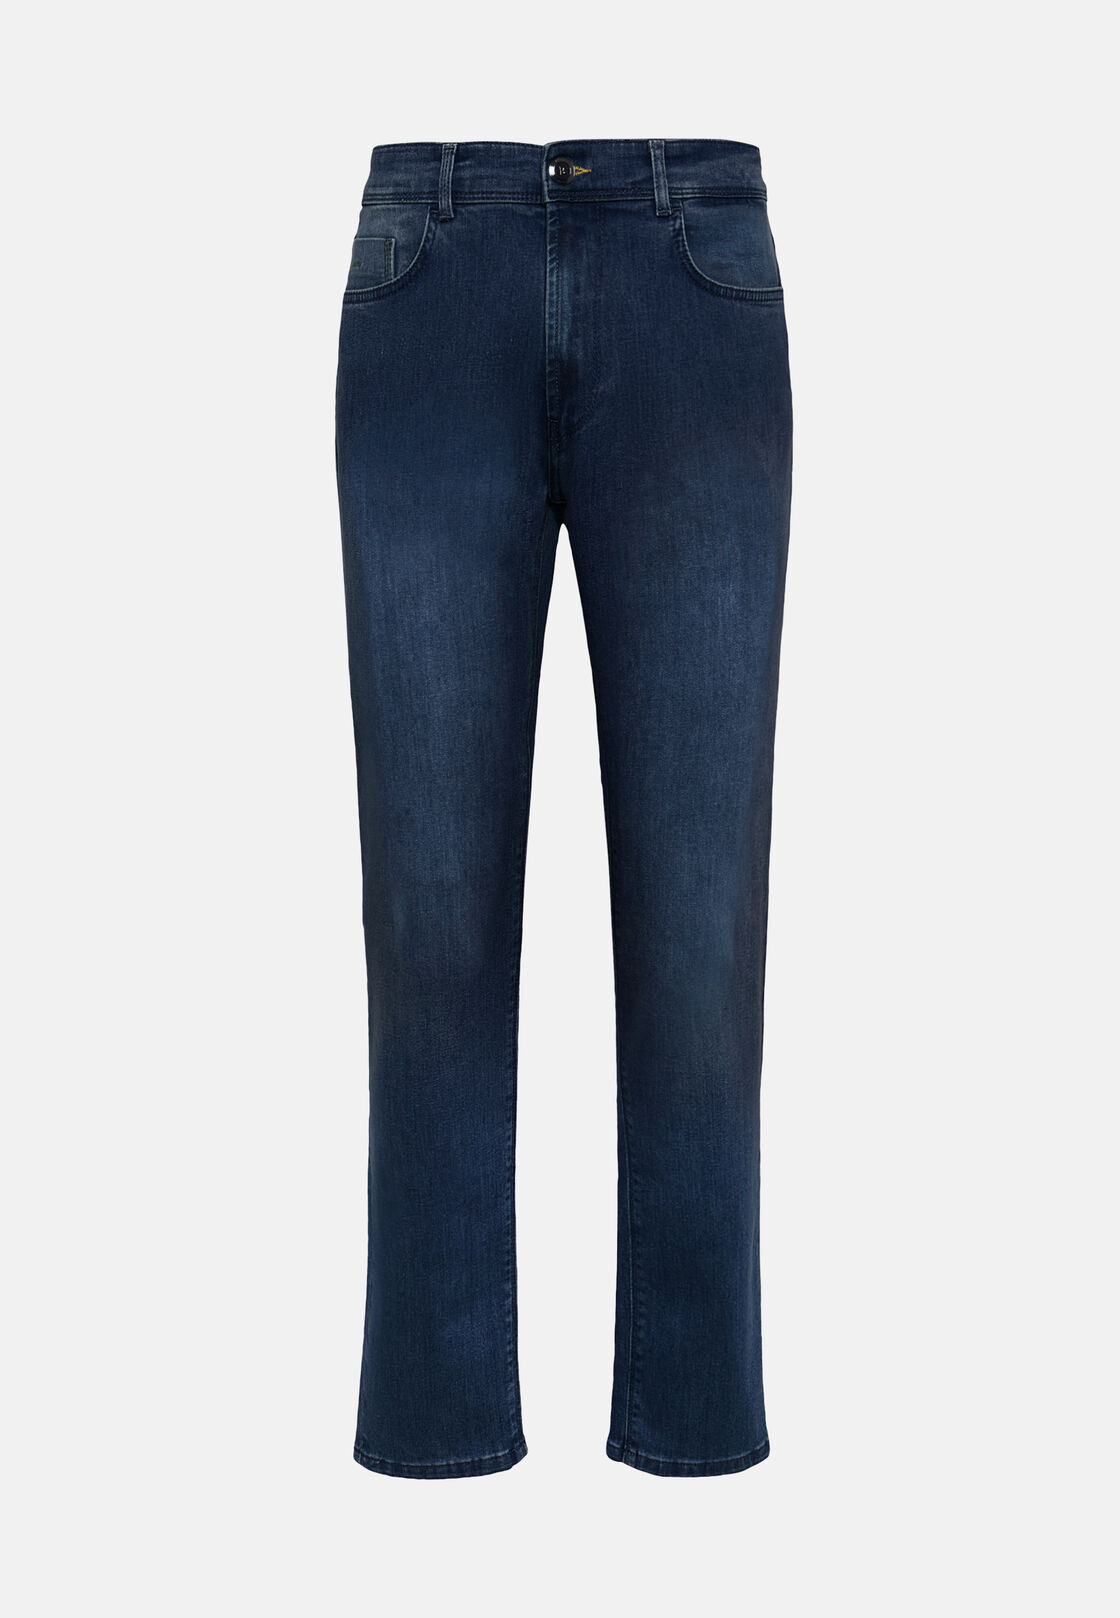 Men's Dark Blue Stretch Denim Jeans